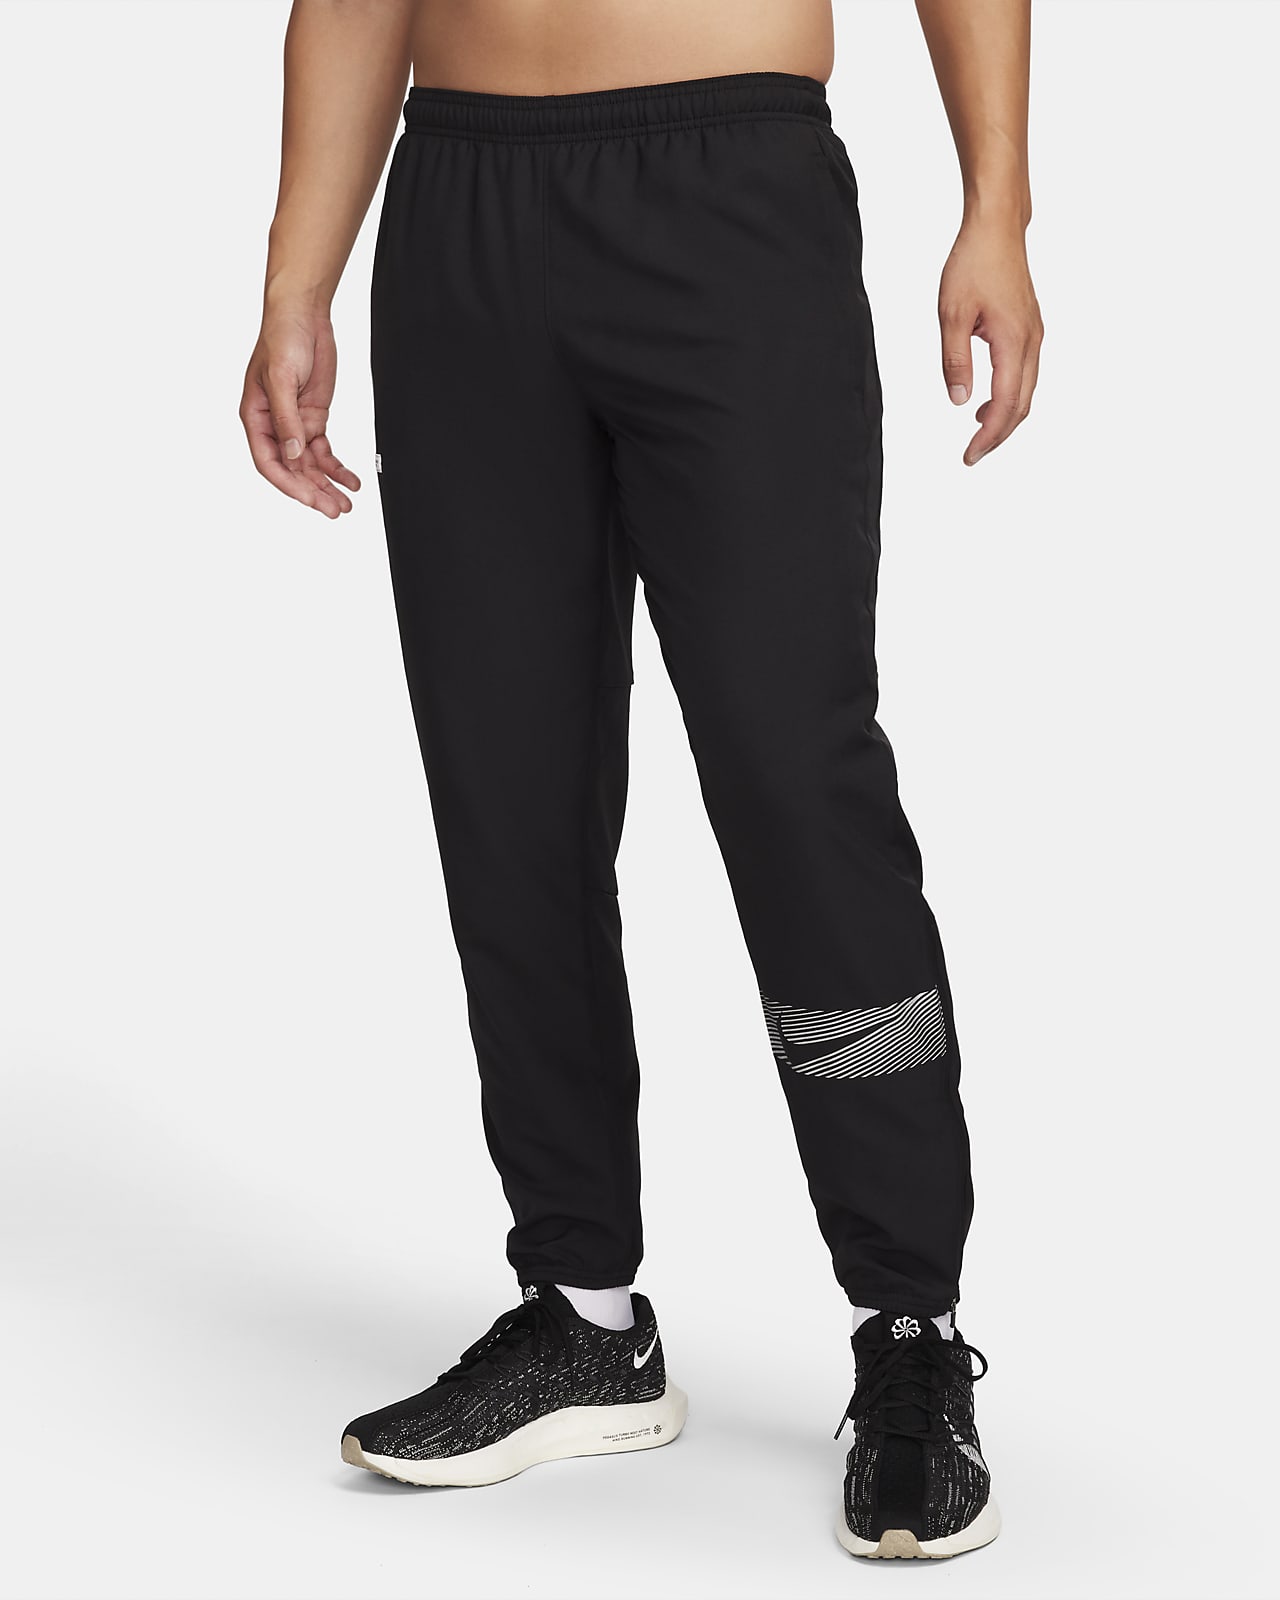 Nike Challenger Flash Men's Dri-FIT Woven Running Pants